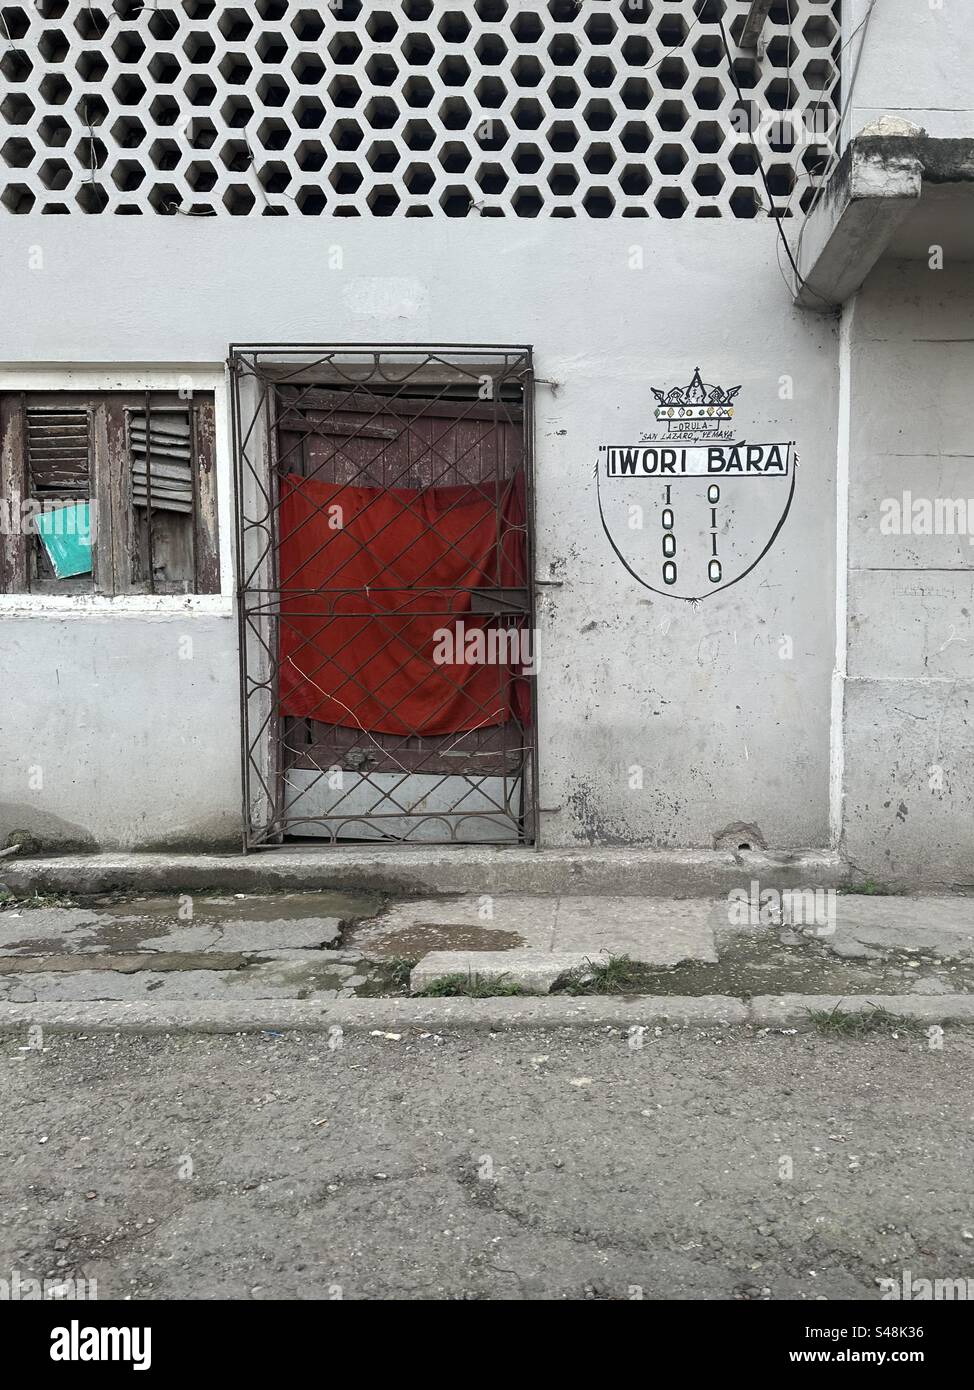 Façade in Cuba near Belascoaín street with text in the outside wall reading ‘Orula, San Lazaro y Yemaya, Iwori Bara’ Stock Photo